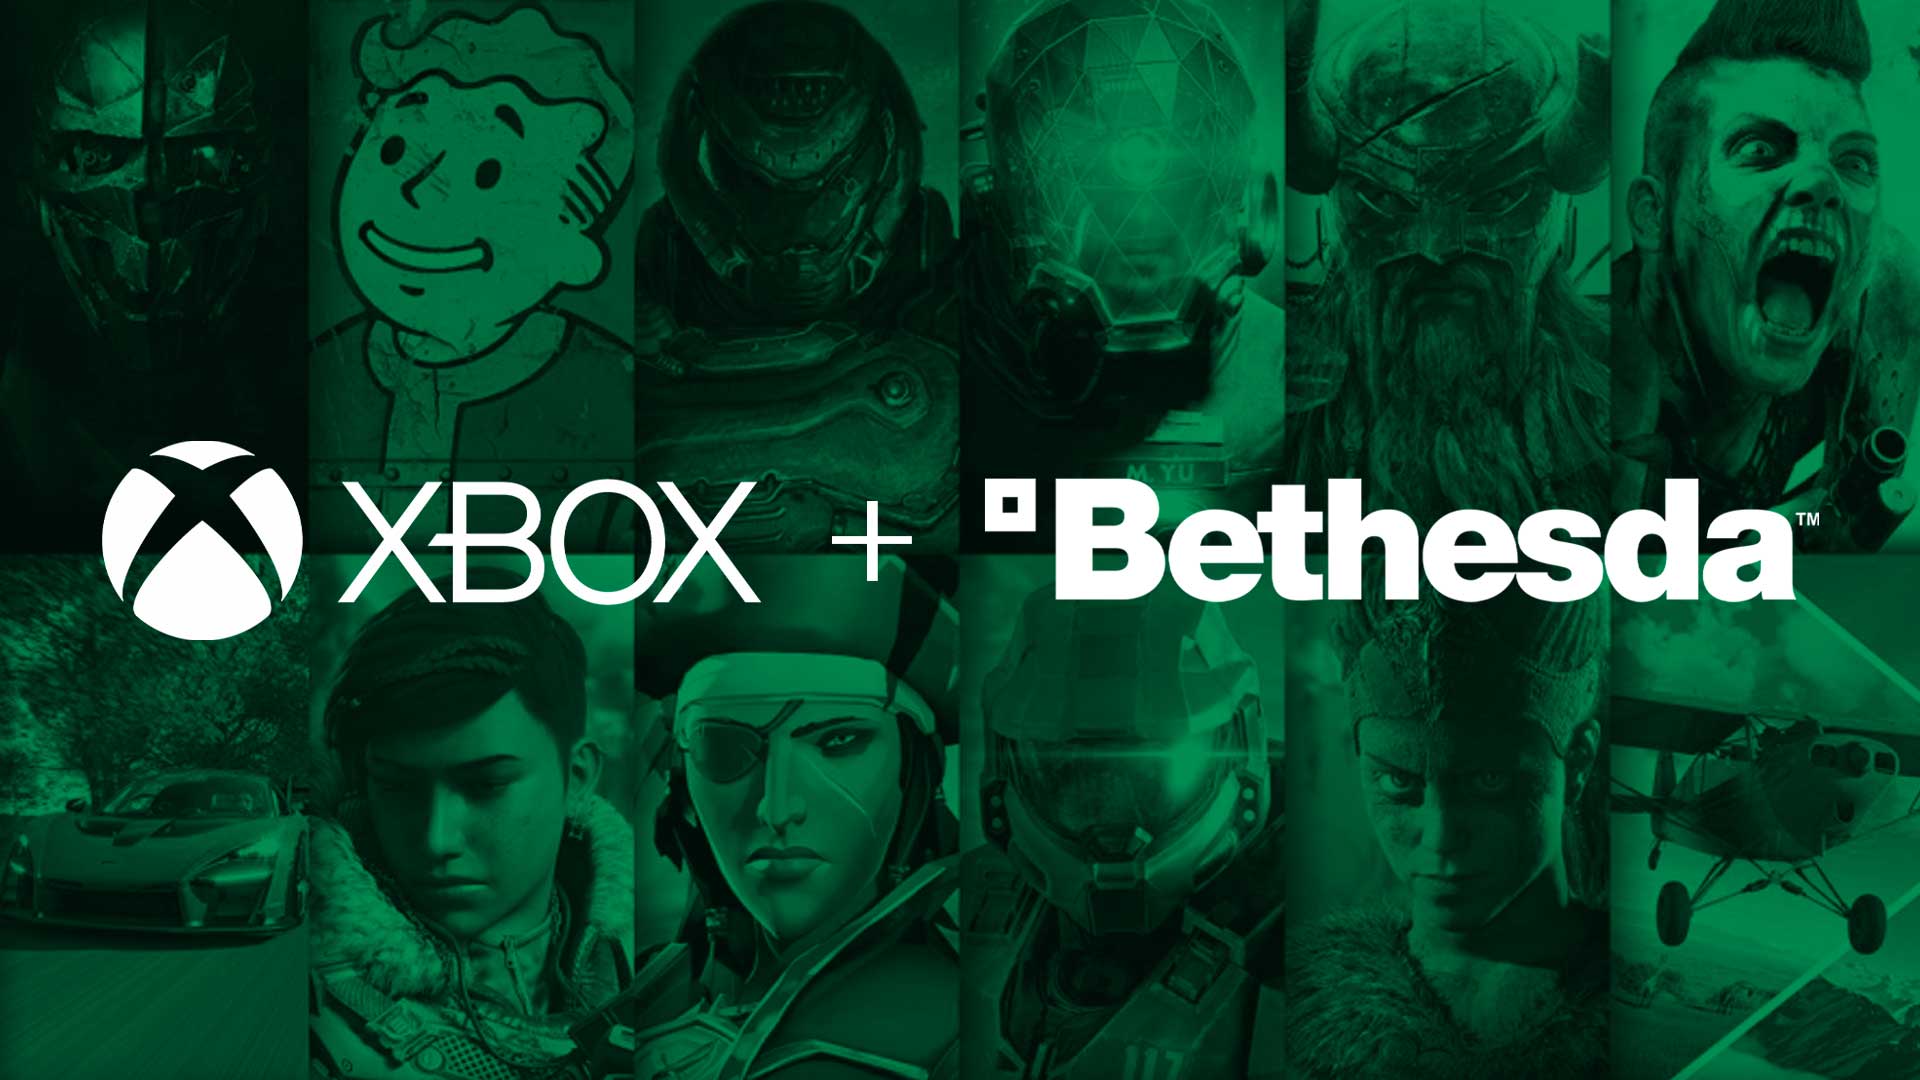 Xbox Bethesda Showcase
